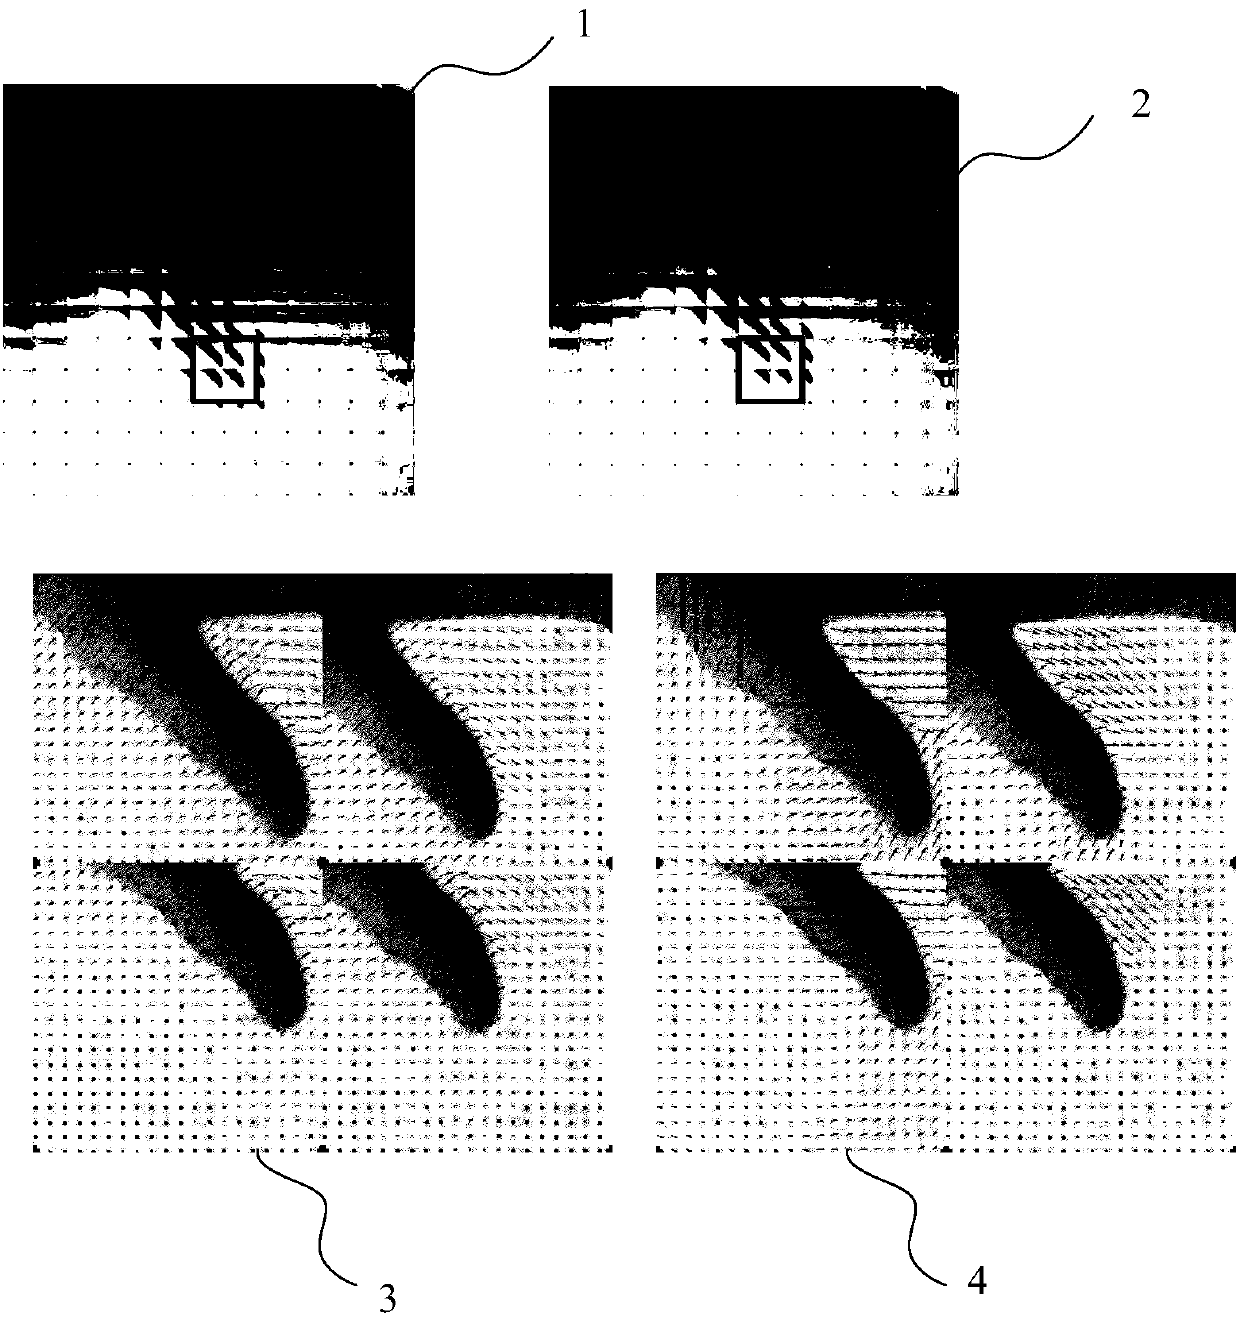 Image array optical flow estimation method for artificial compound eye camera